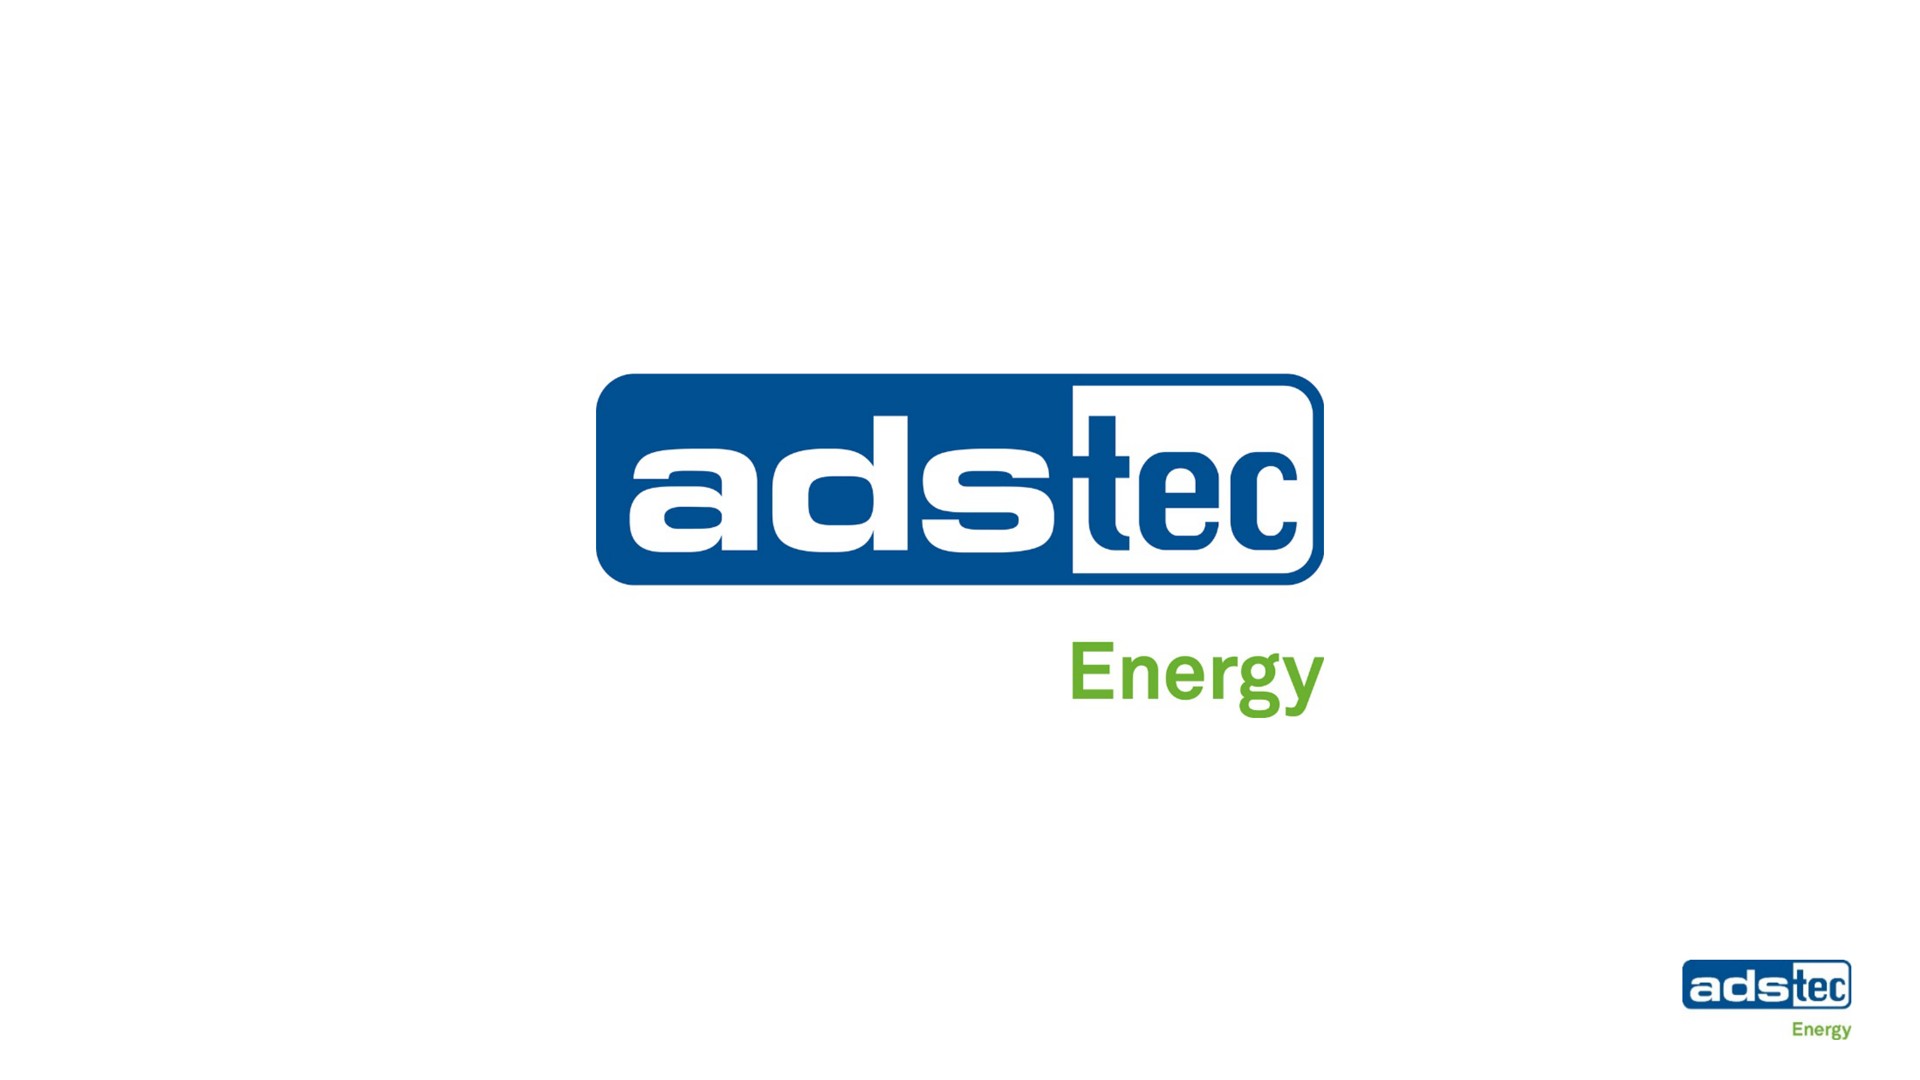 energy | ads-tec Energy